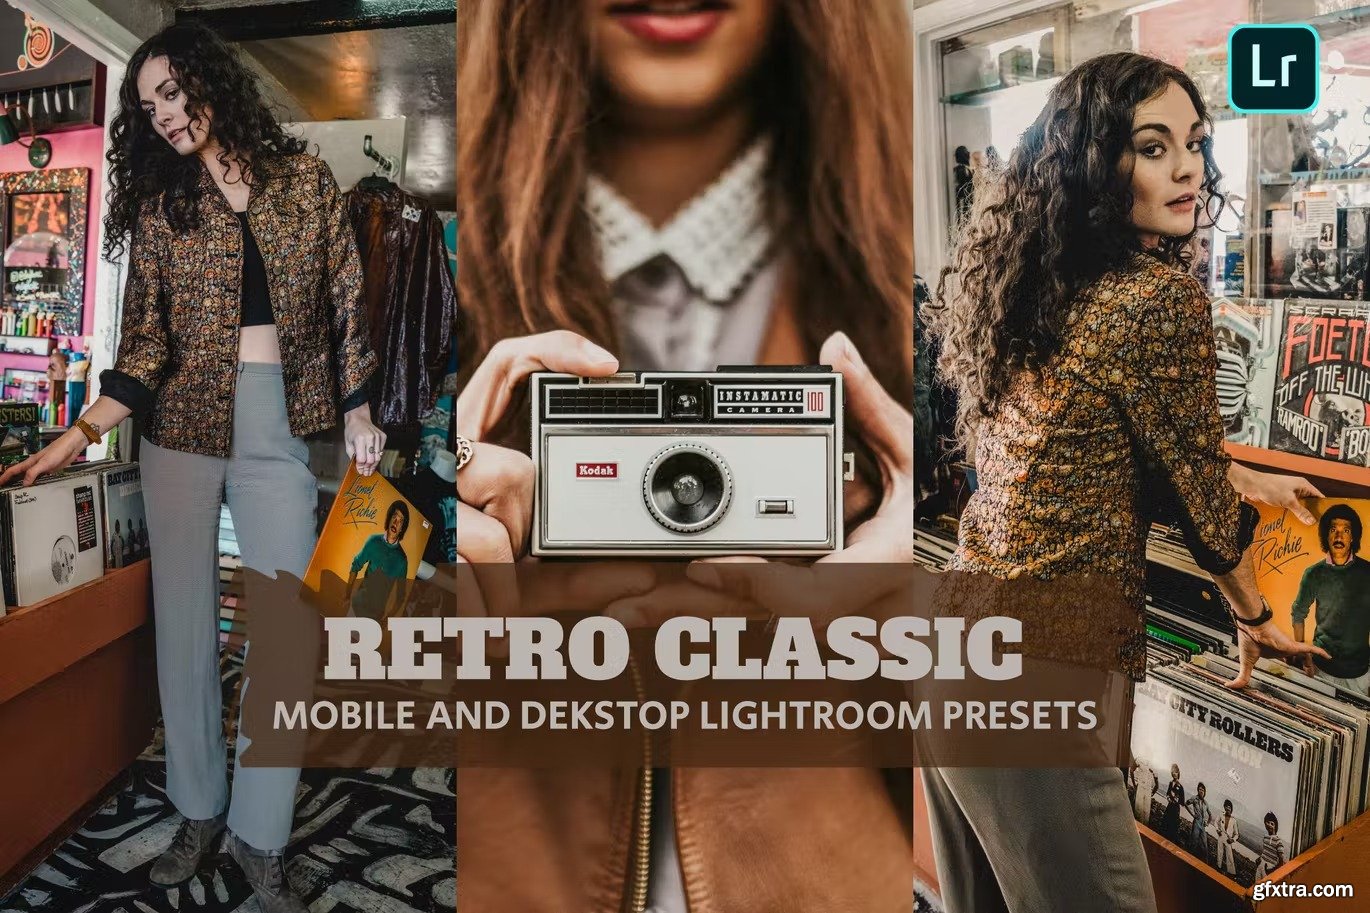 Retro Classic Lightroom Presets Dekstop and Mobile » GFxtra